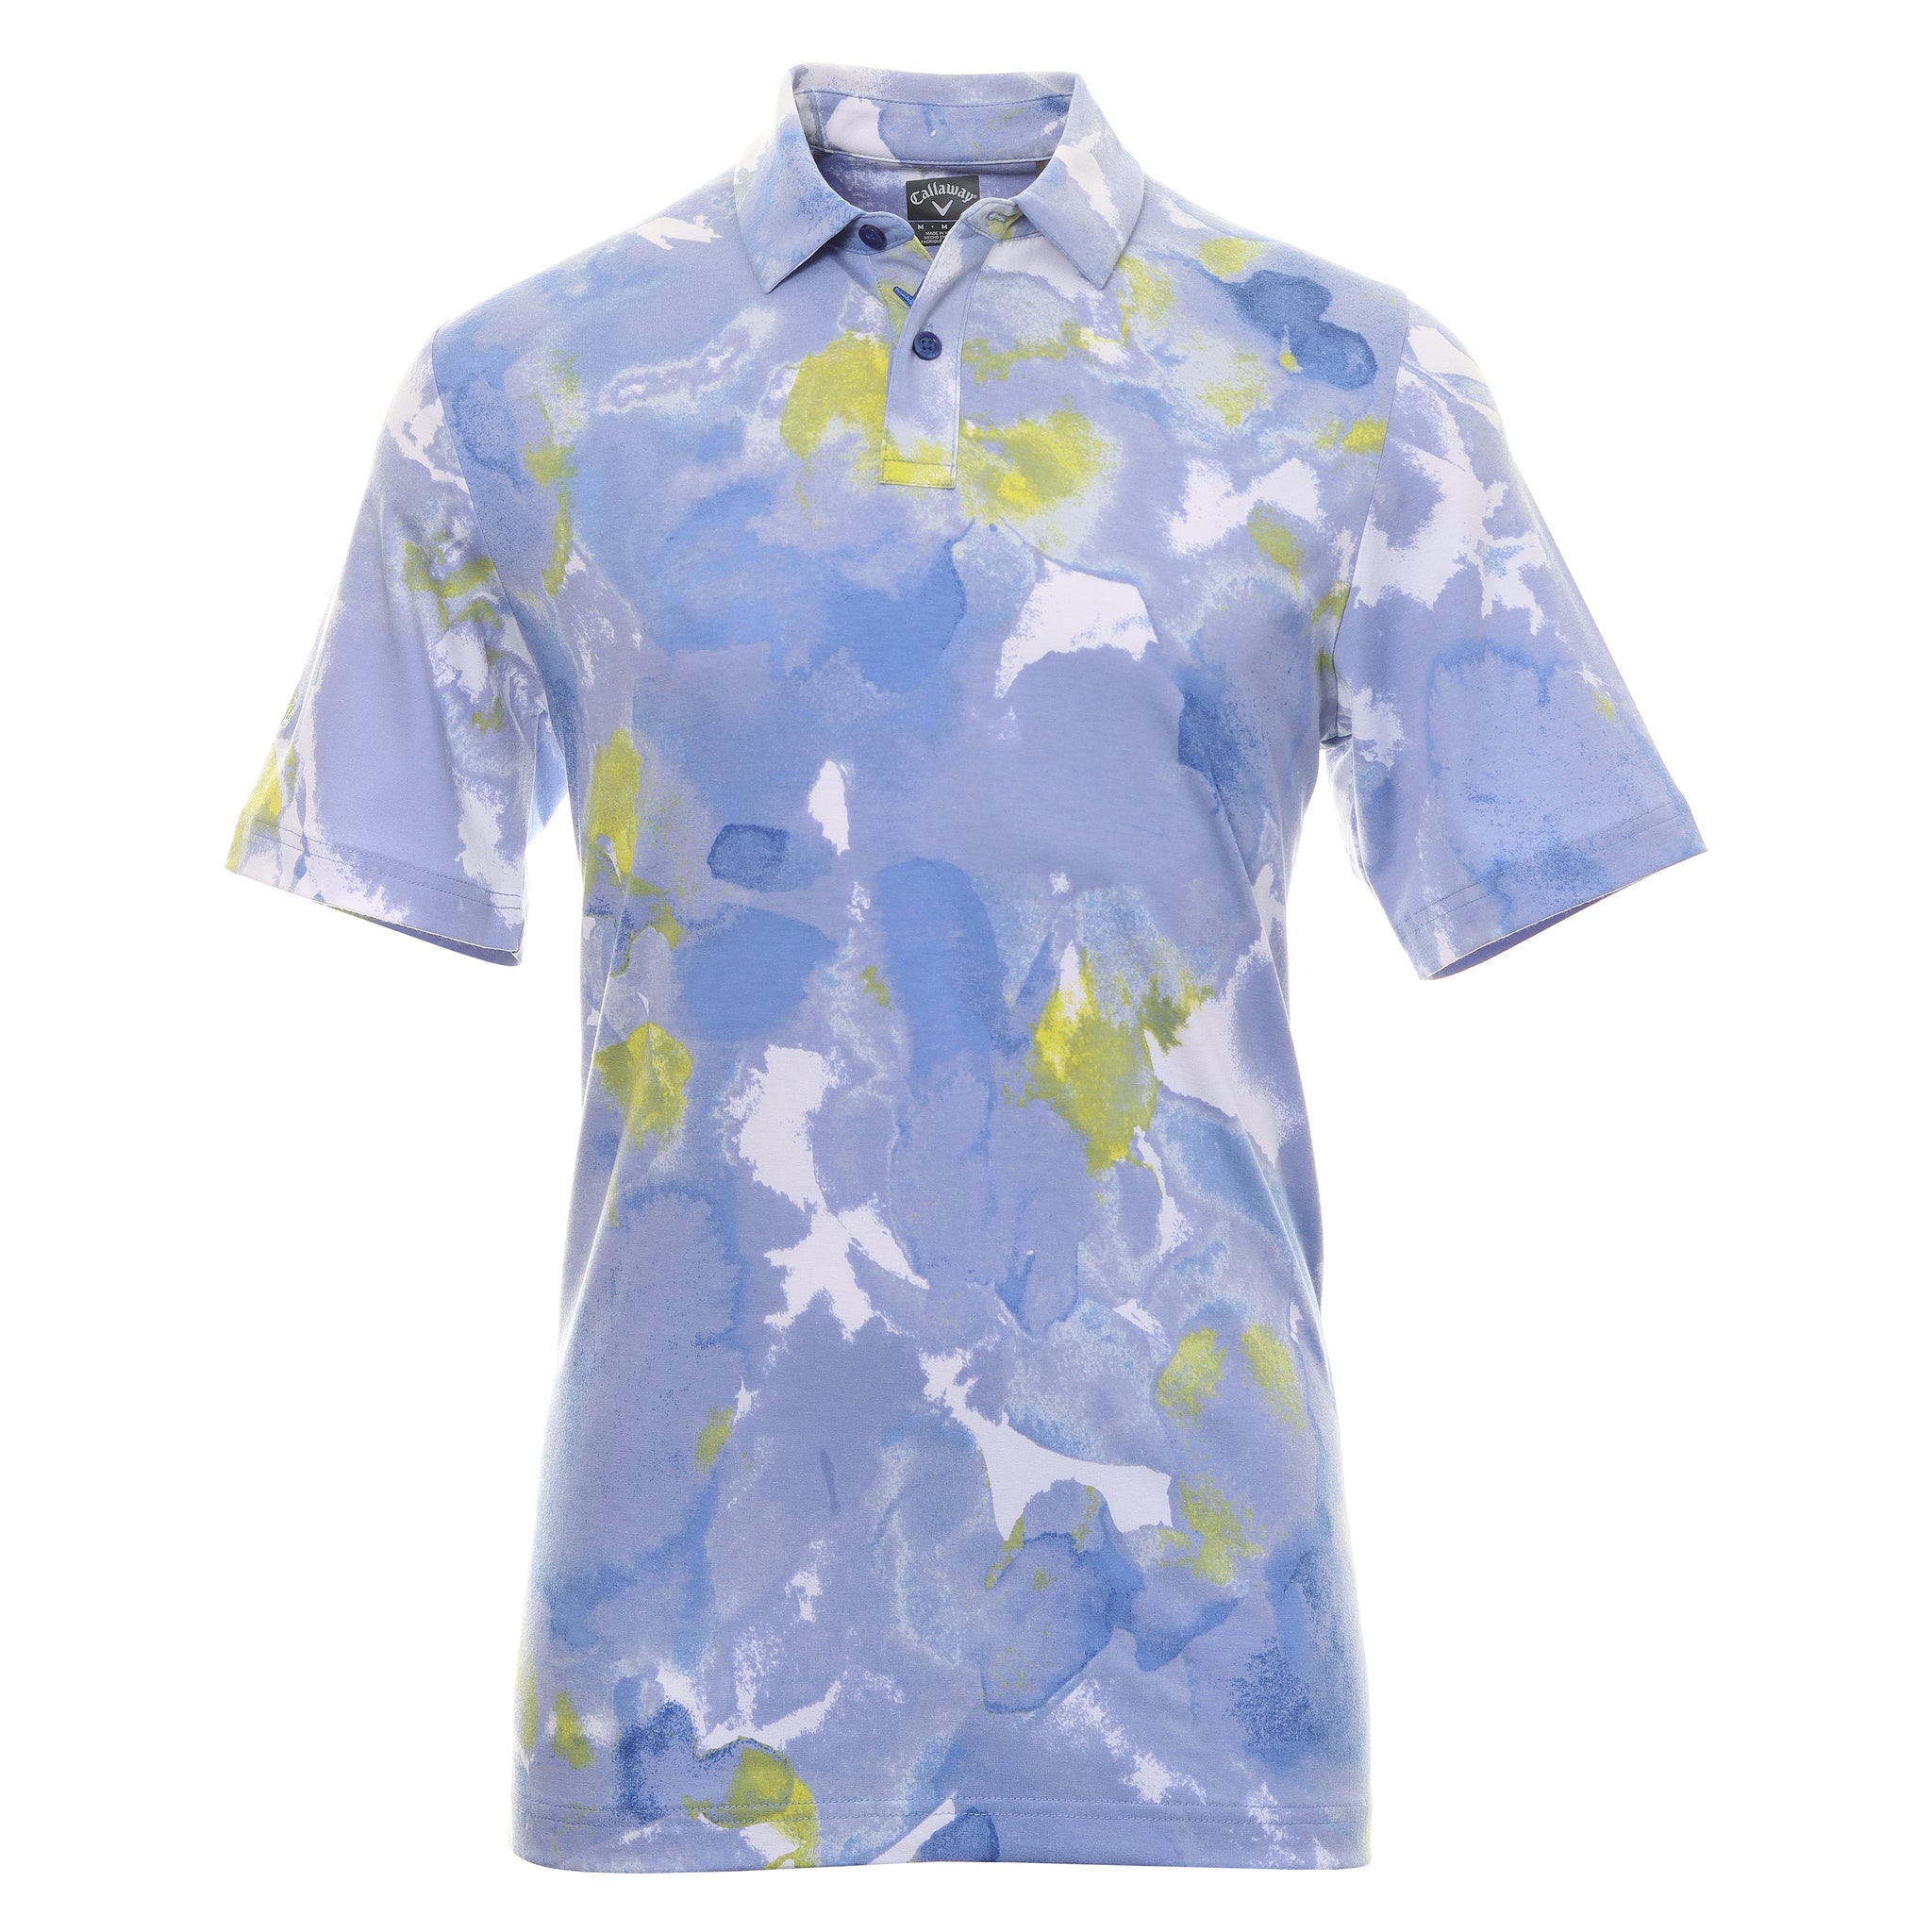 Callaway Golf Thermal Dye Print Shirt